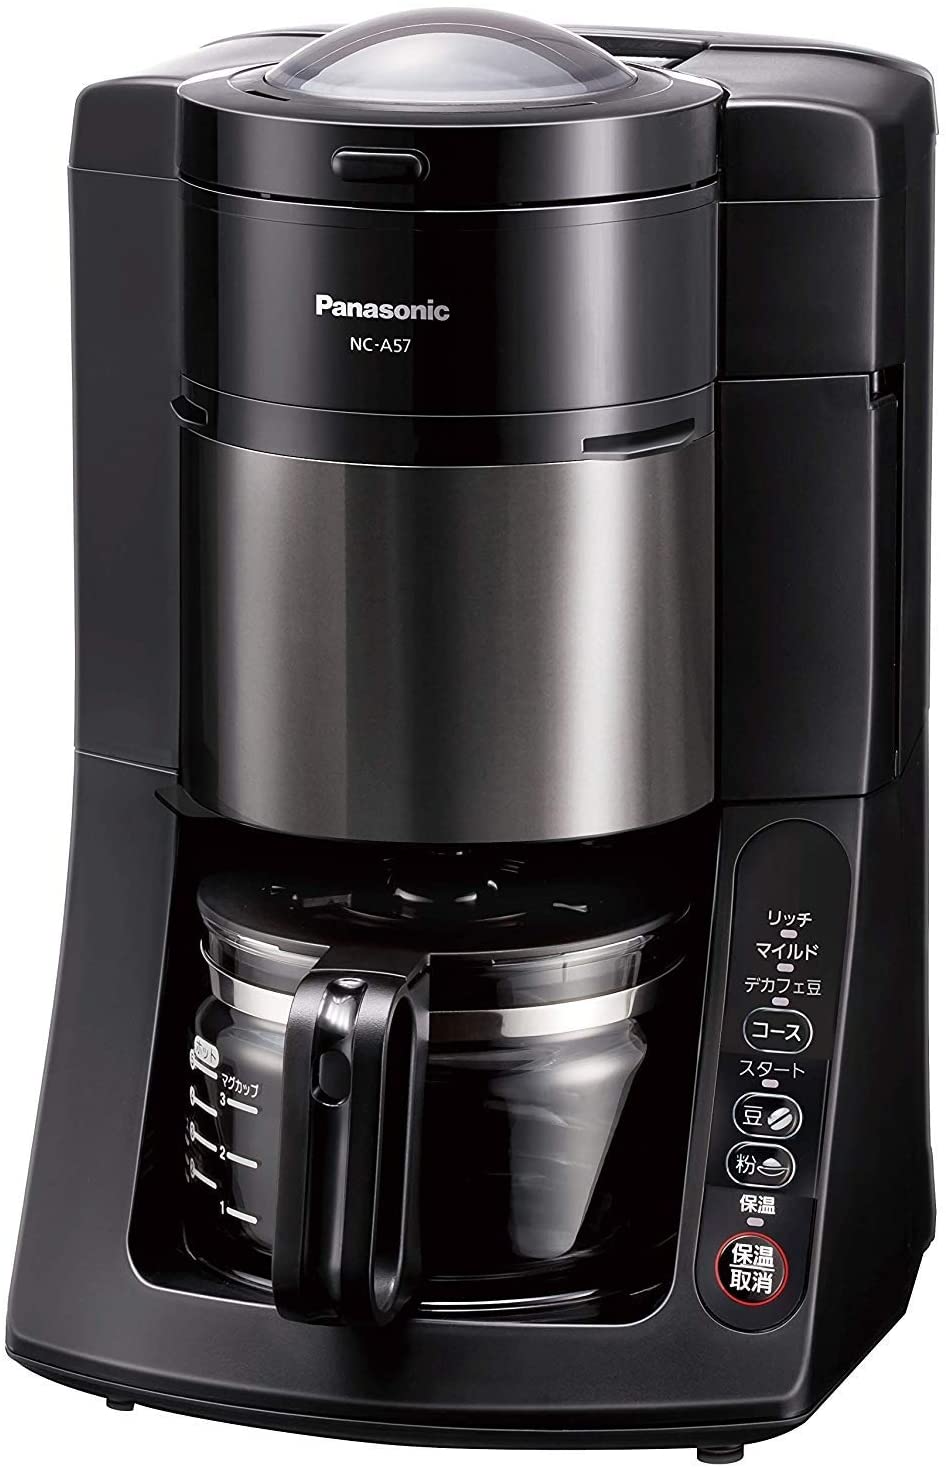 Panasonic(パナソニック) 沸騰浄水コーヒーメーカー NC-A57の口コミ 